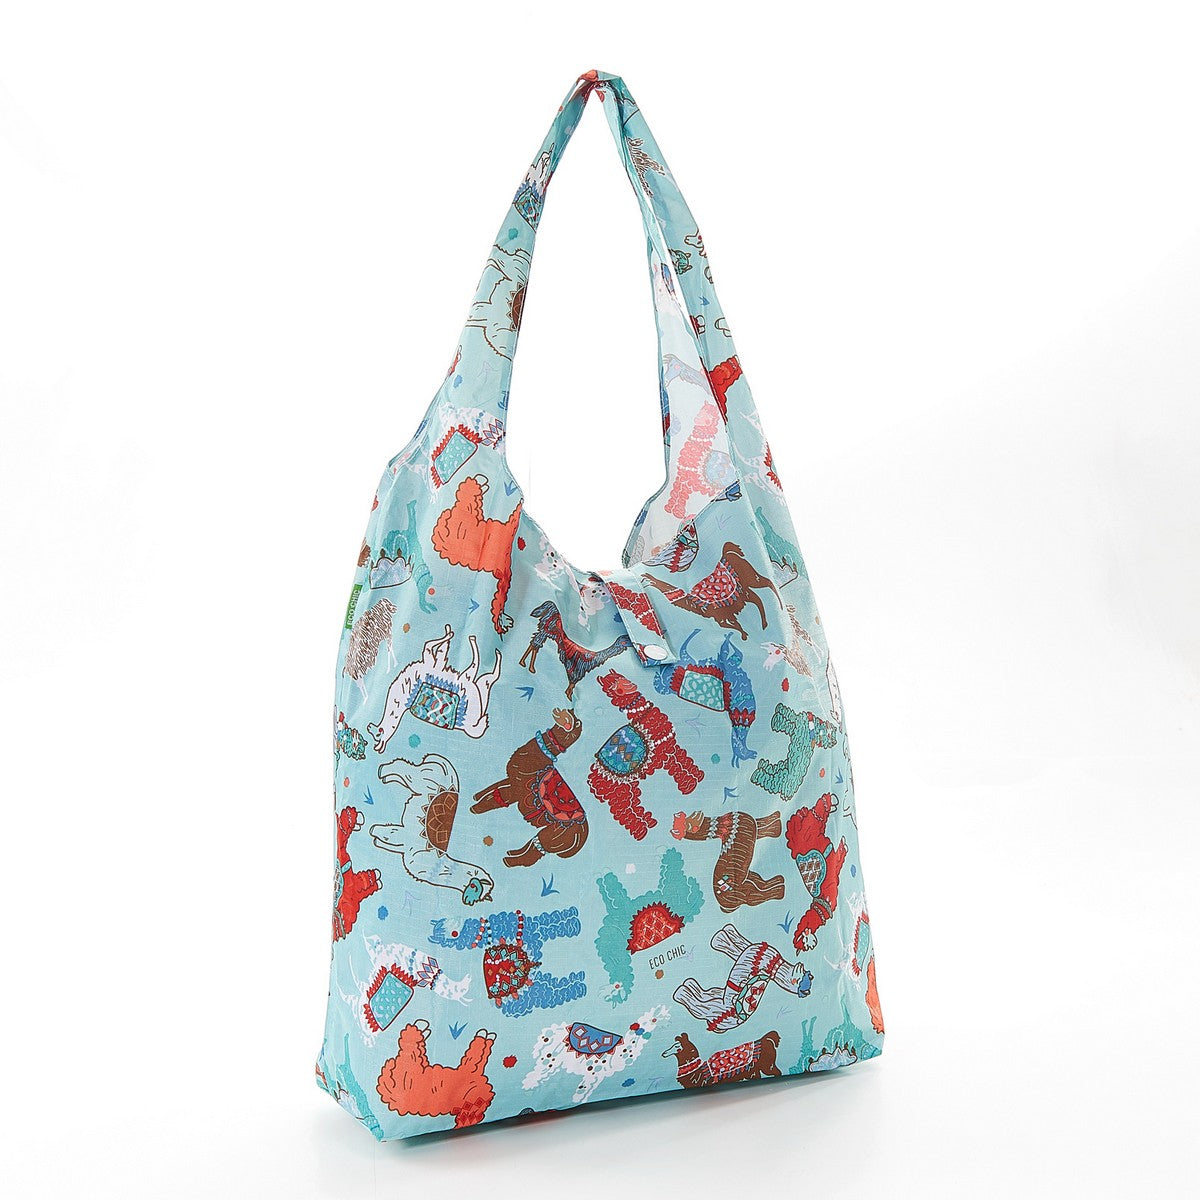 Llama print foldaway shopper holds 15kg max ECO CHIC shopping bag